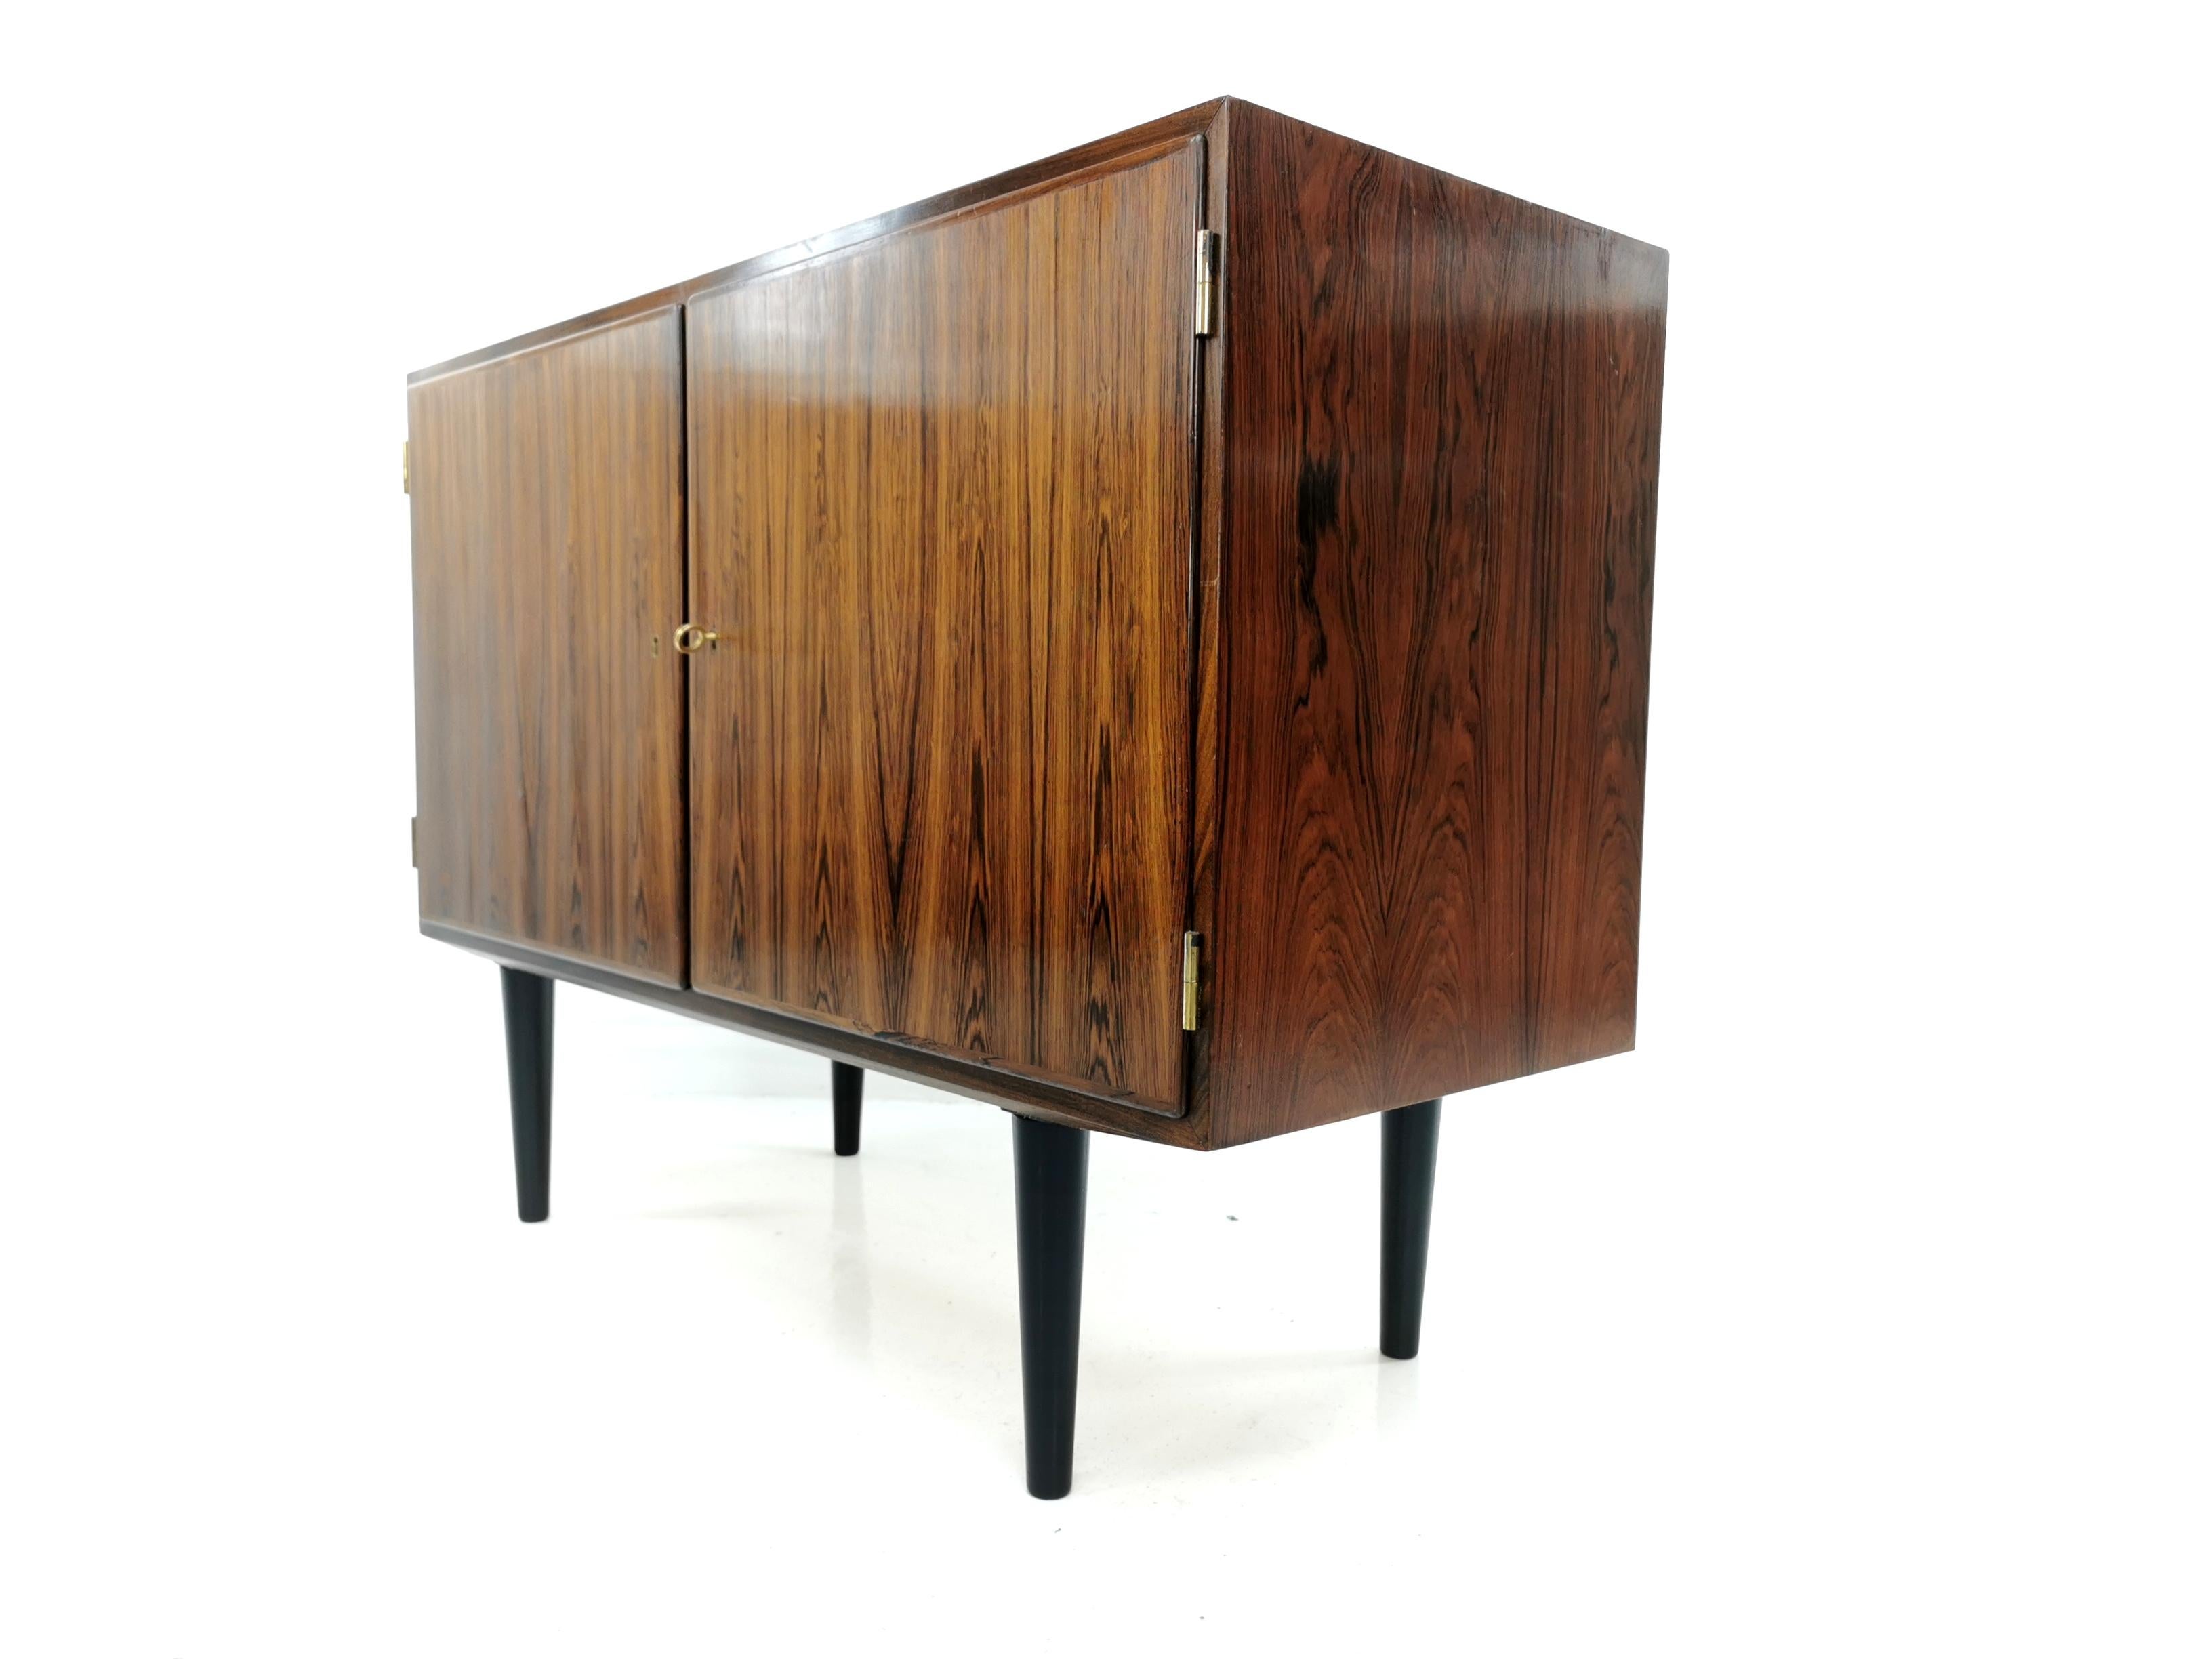 Danish Hundevad Rosewood Media Unit Sideboard 1970s Midcentury Vintage Cabinet 2